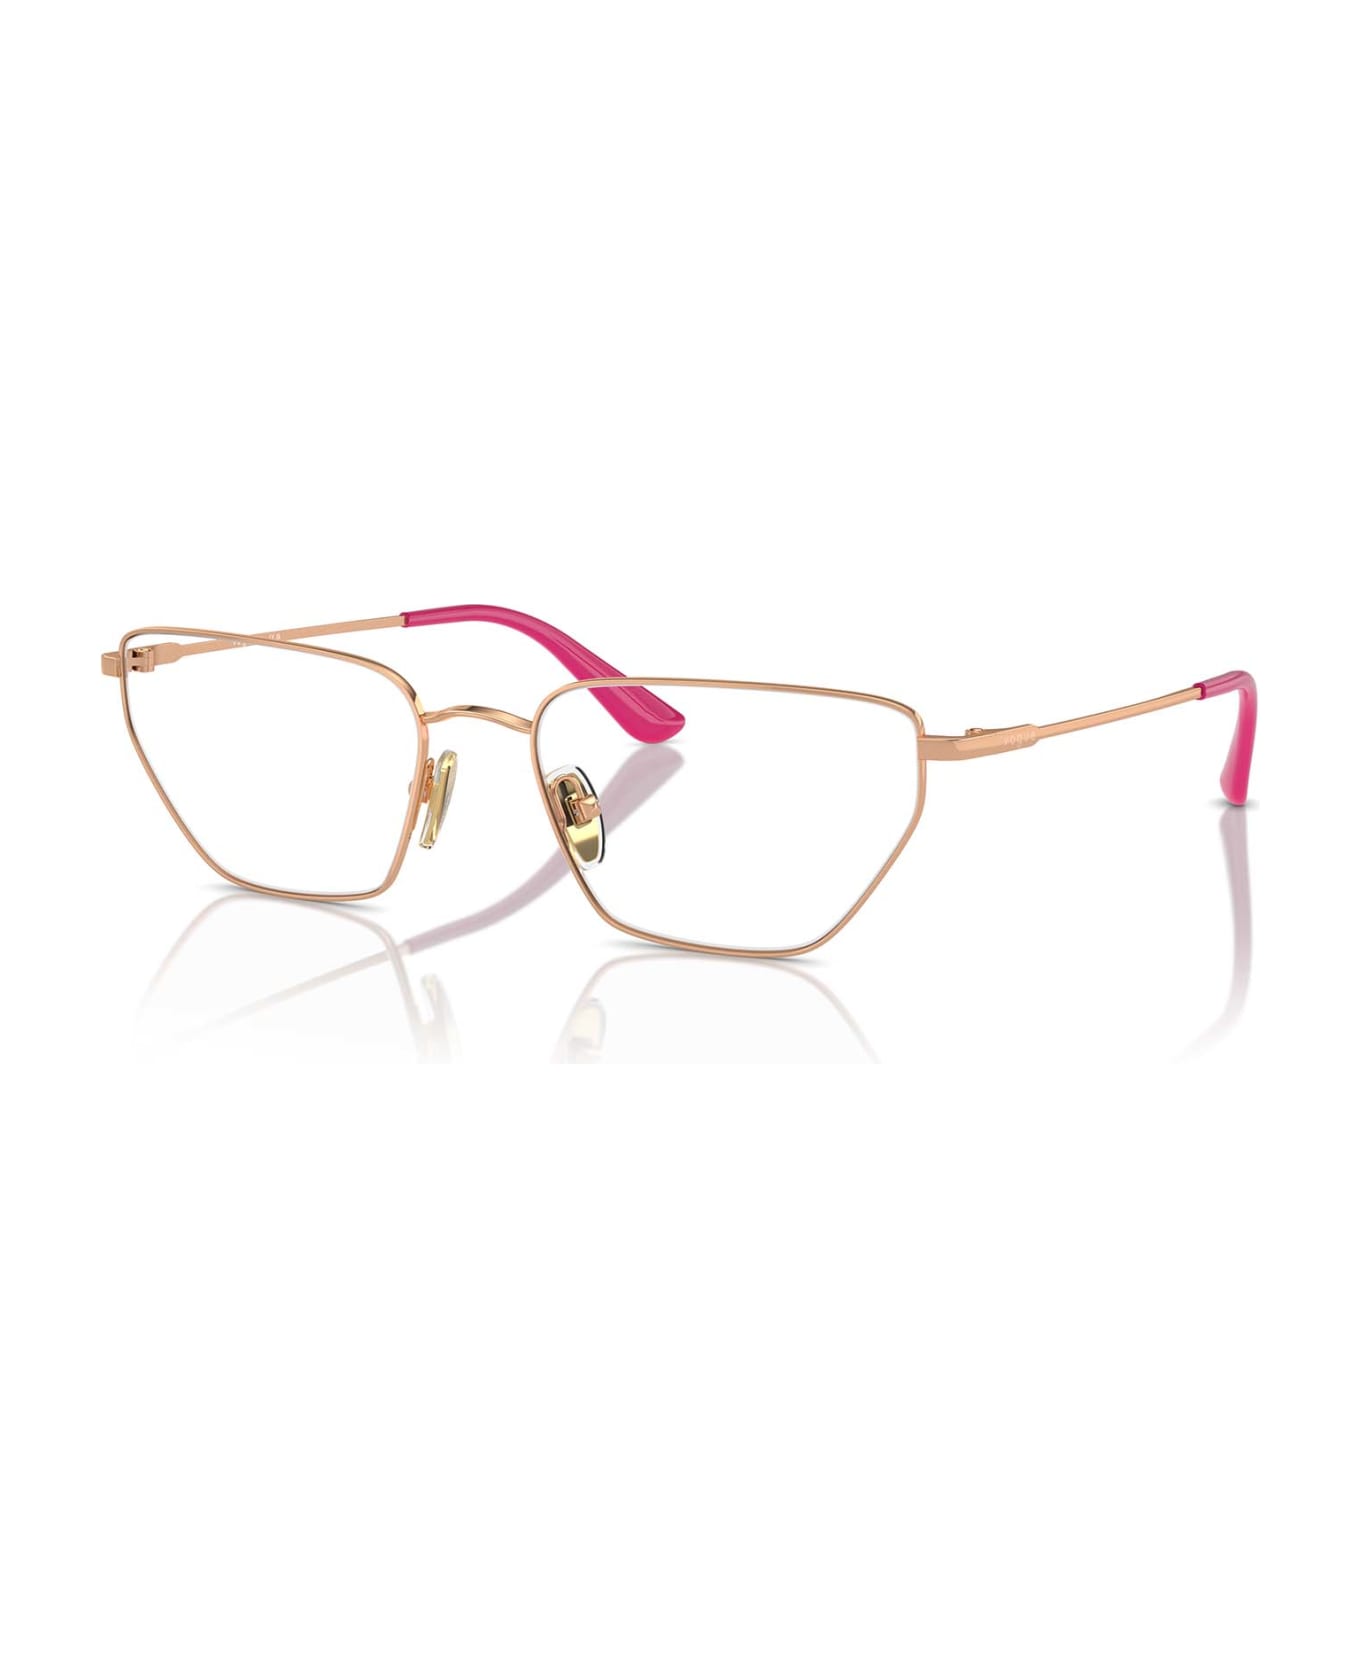 Vogue Eyewear Vo4317 Rose Gold Glasses - Rose Gold